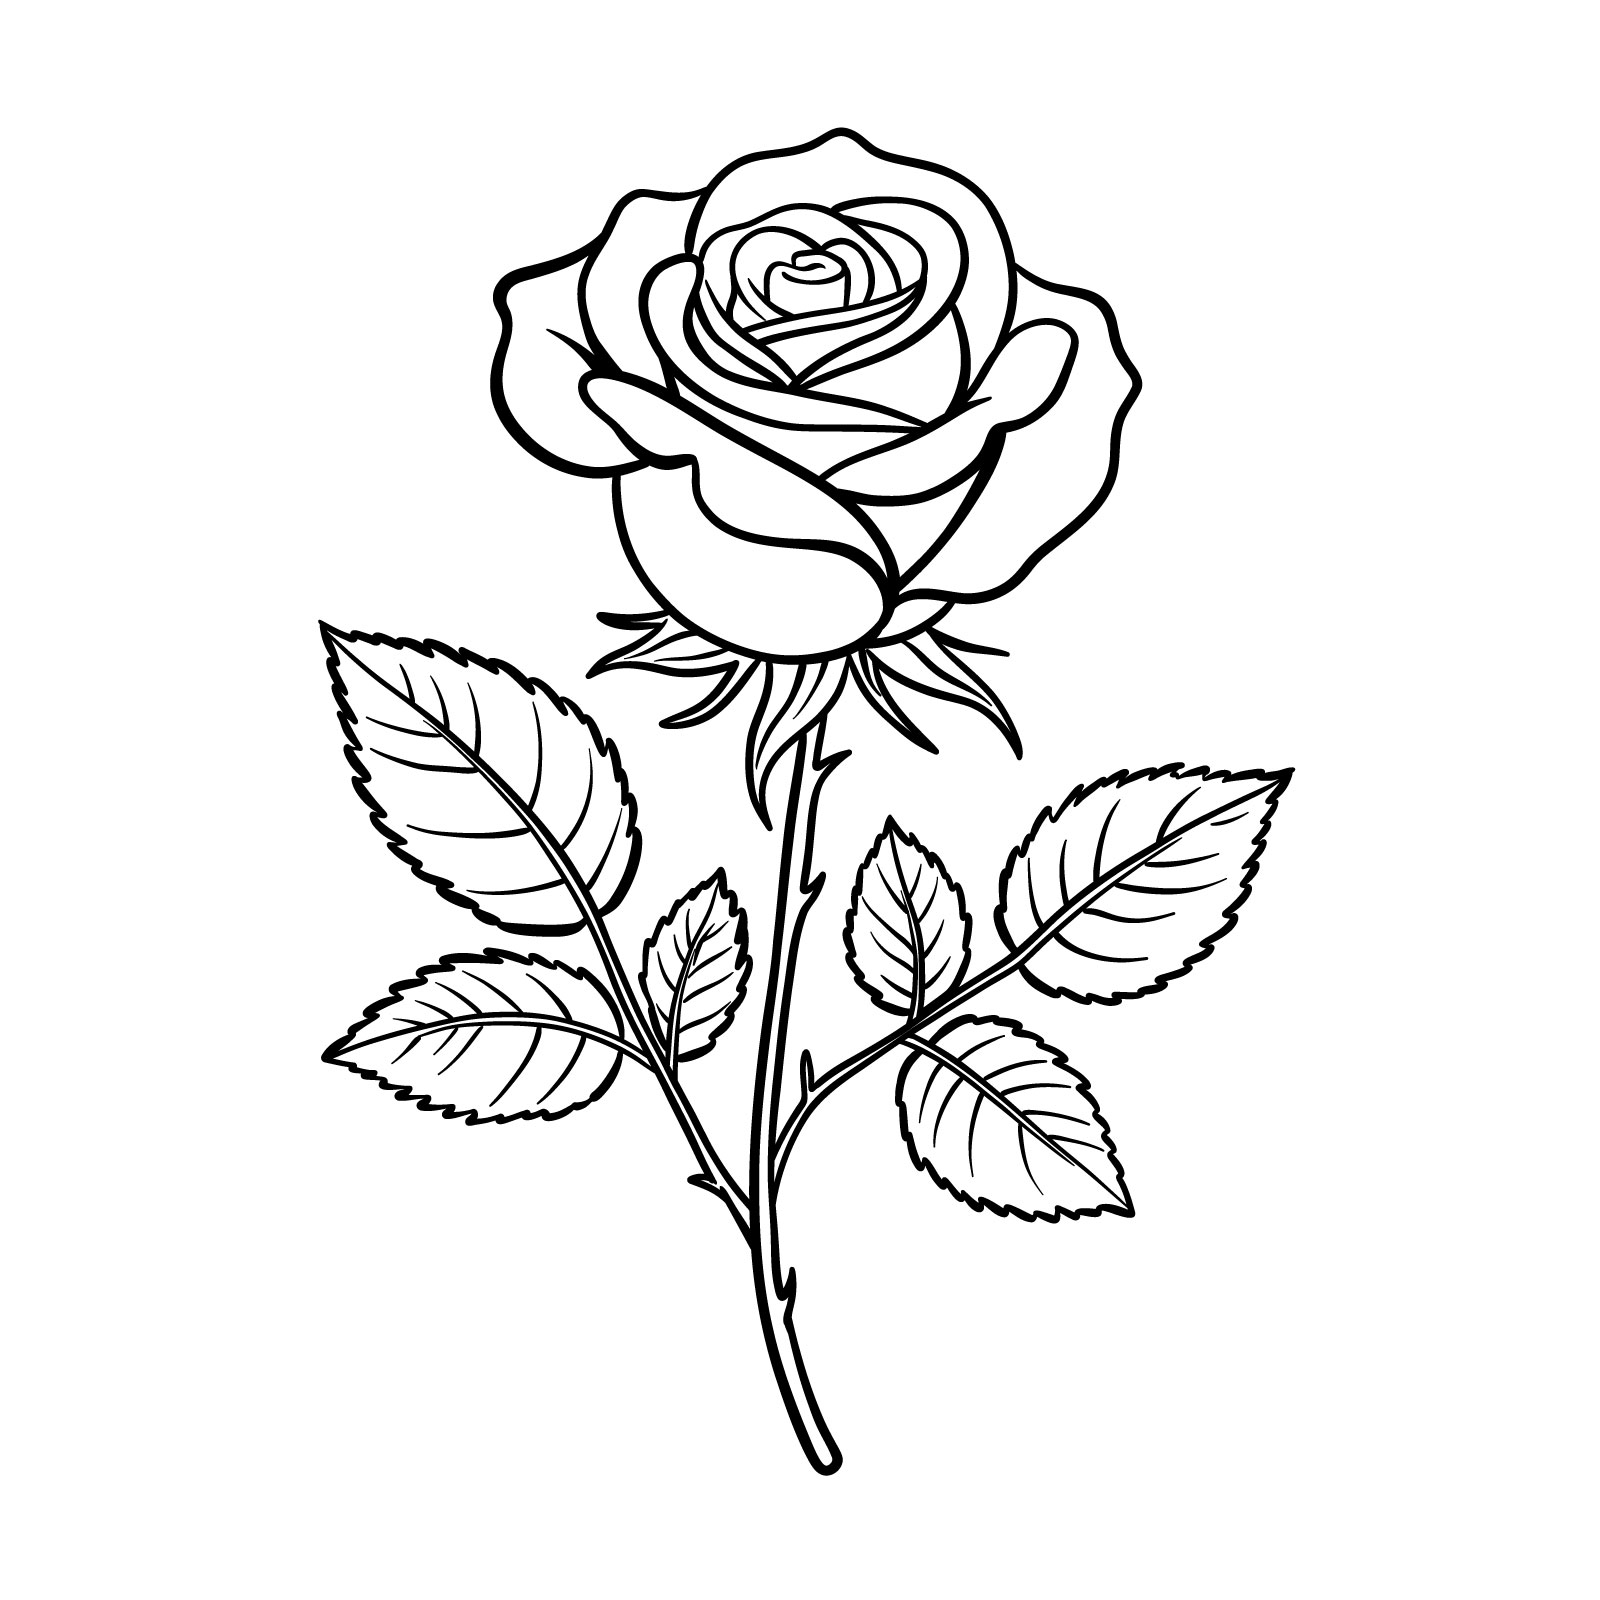 Imperfect Rose Drawing - Carol's Drawing Blog